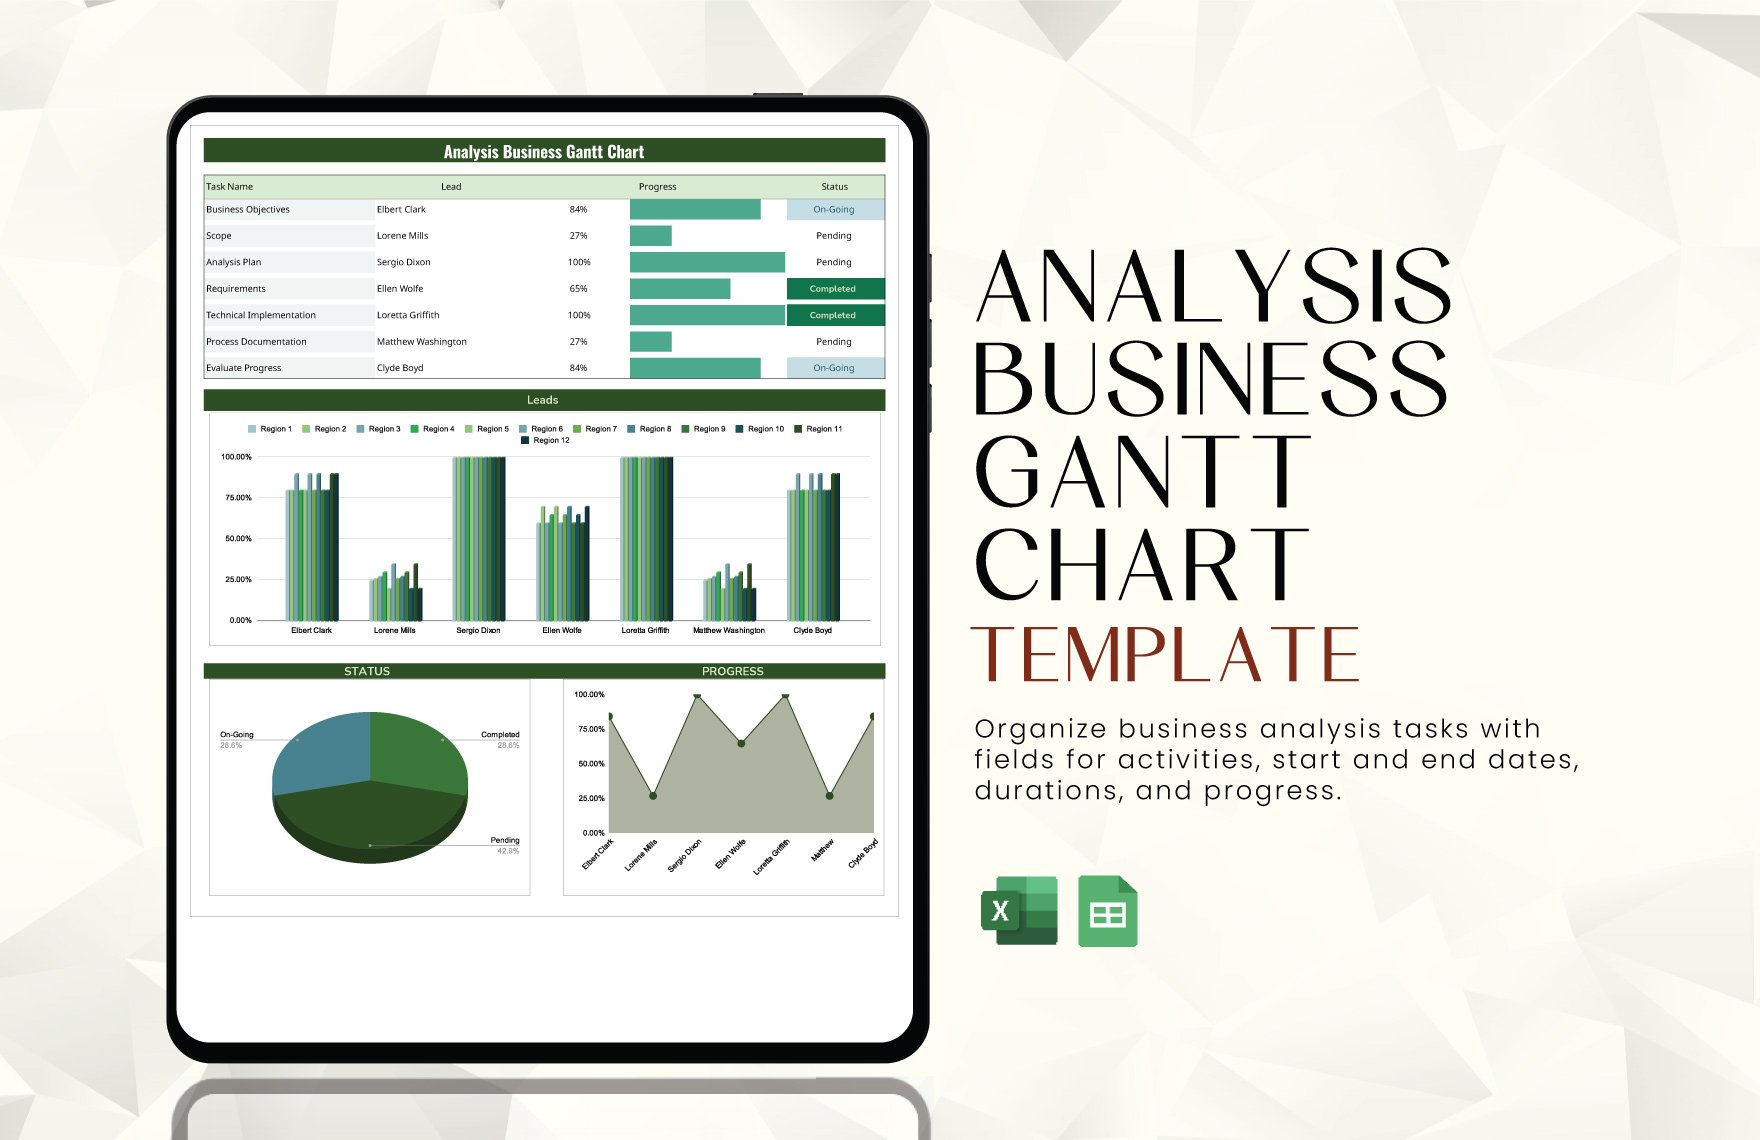 Analysis Business Gantt Chart Template in Excel, Google Sheets